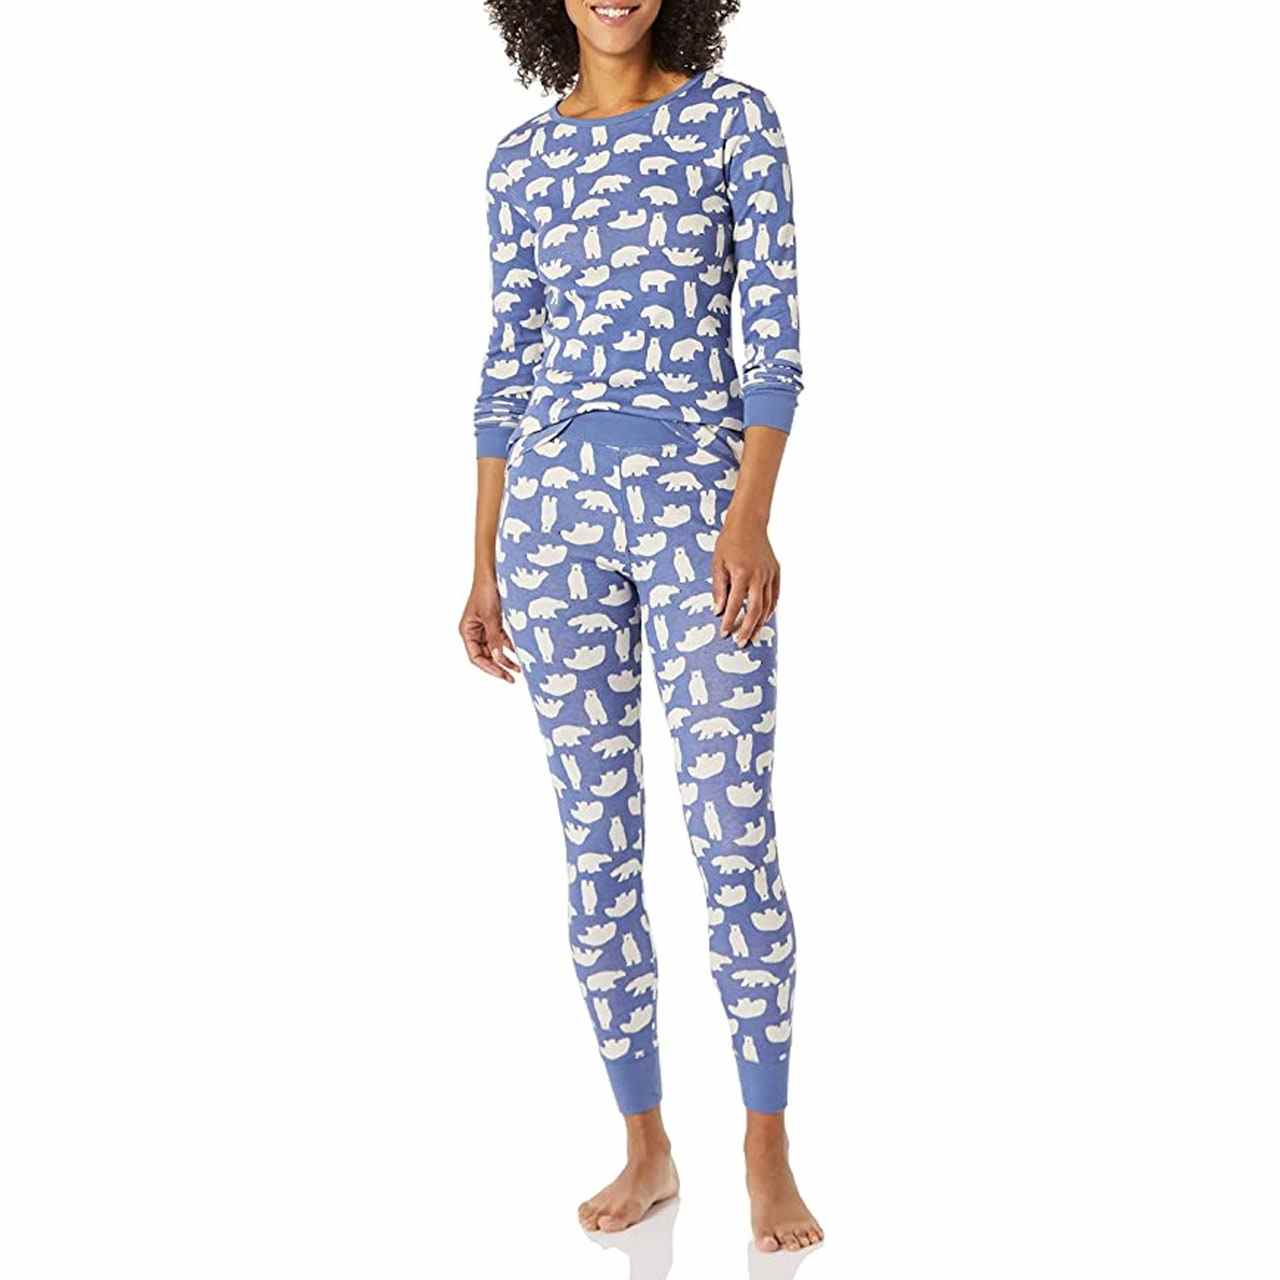 Amazon Essentials Women's Snug-Fit Cotton Pajama Set